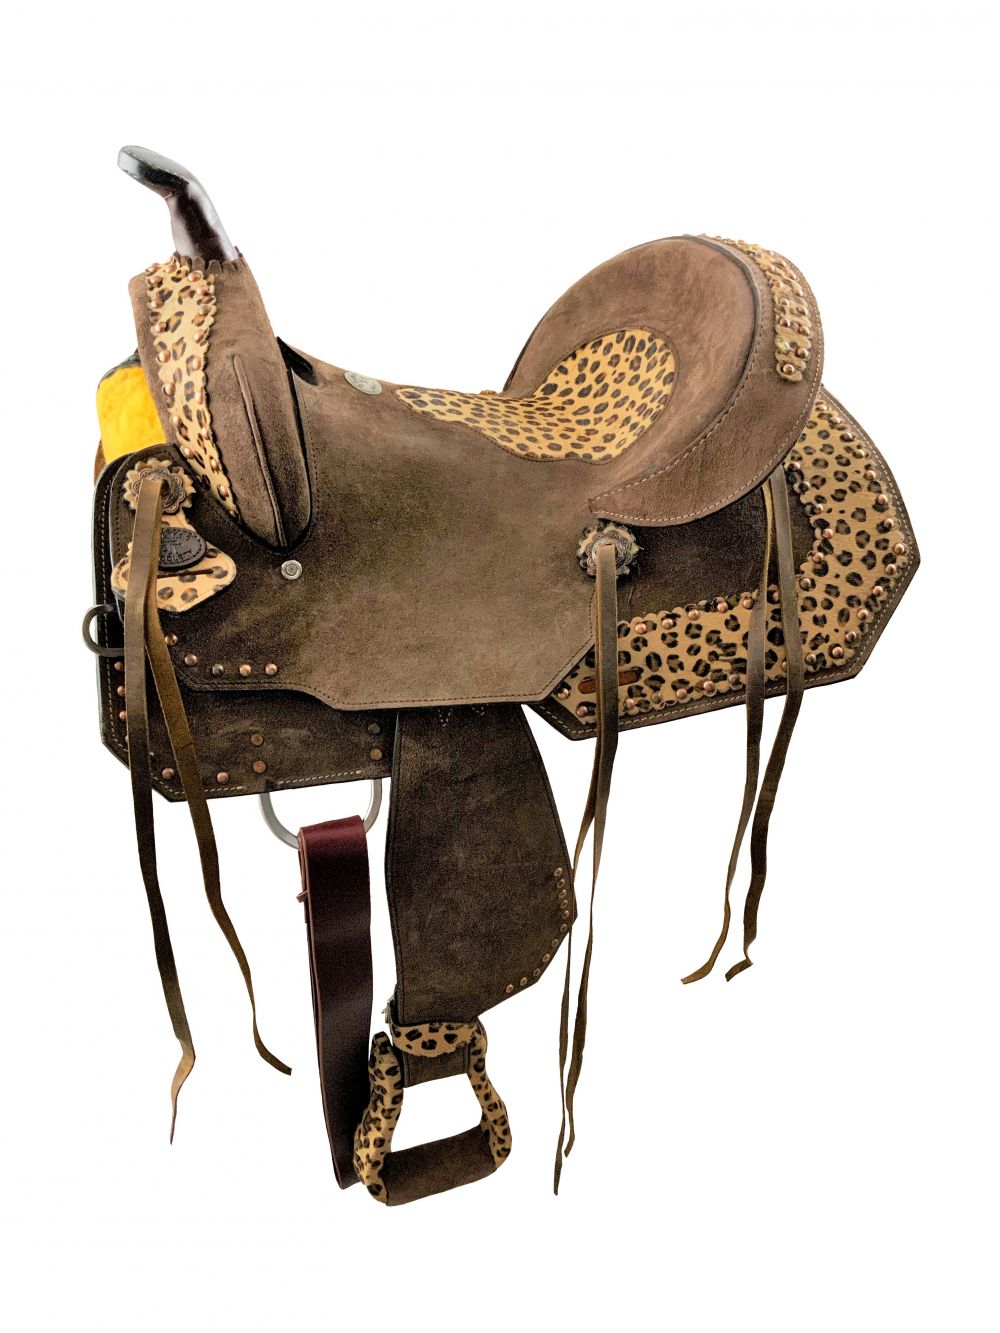 12"  Double T   Youth Hard Seat Barrel style saddle with Cheetah Seat Barrel Saddle Shiloh   